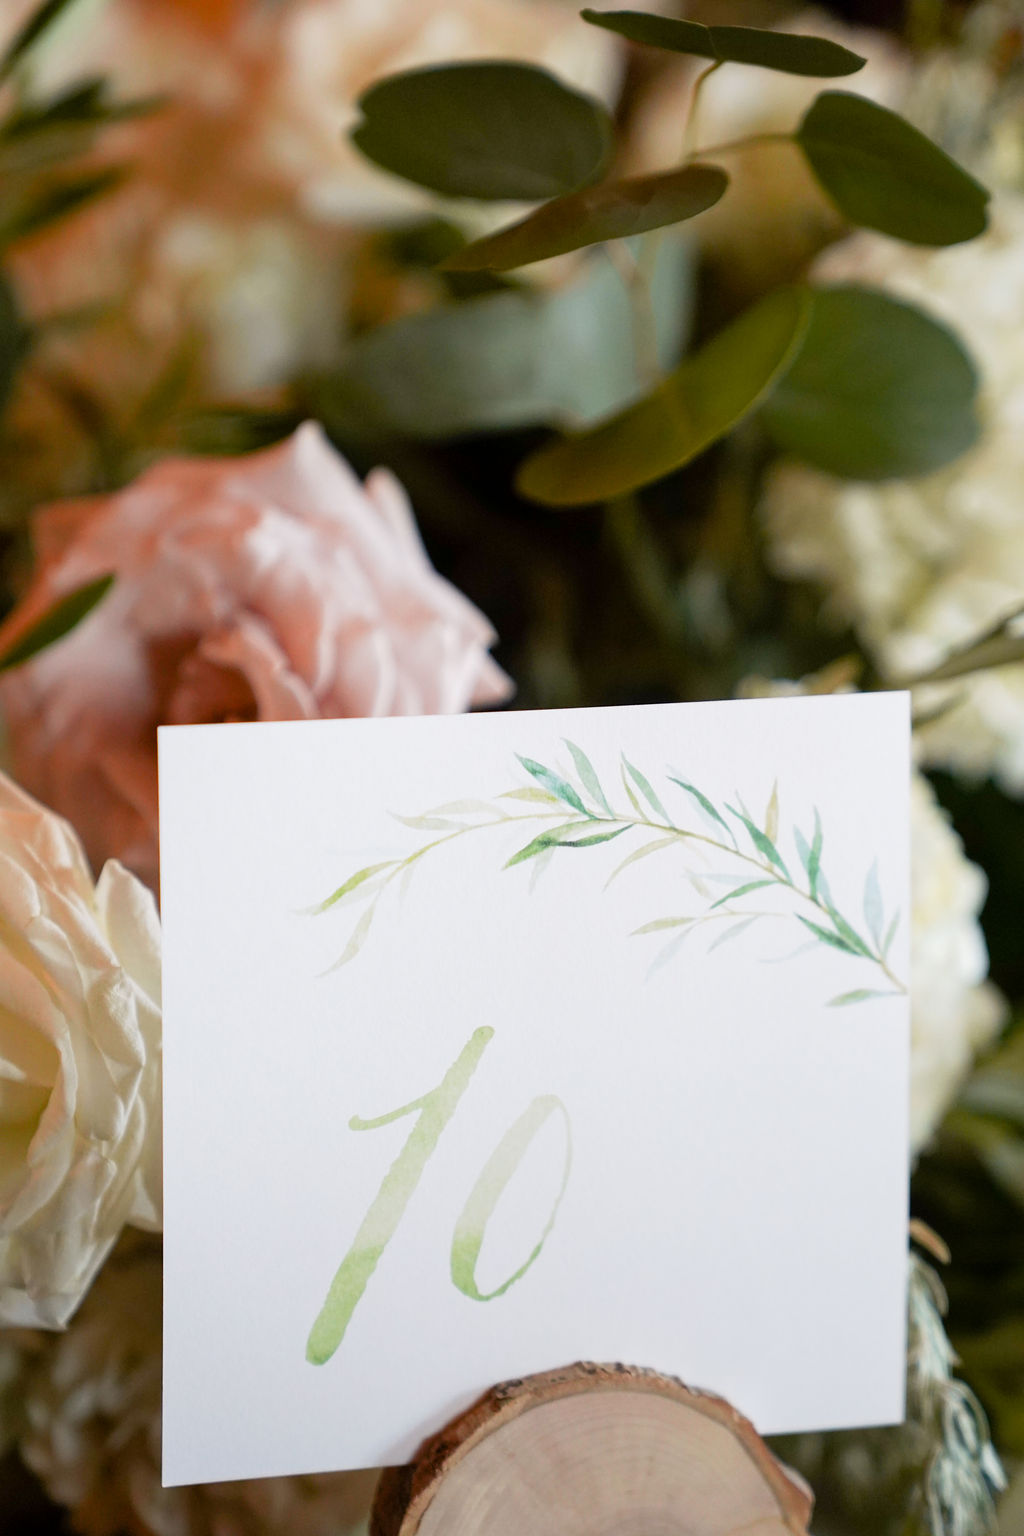 Montage Deer Valley Wedding | Summer Wedding | Blush Wedding Design | Outdoor Ceremony | Michelle Leo Events | Utah Event Planner | Pepper Nix Photography